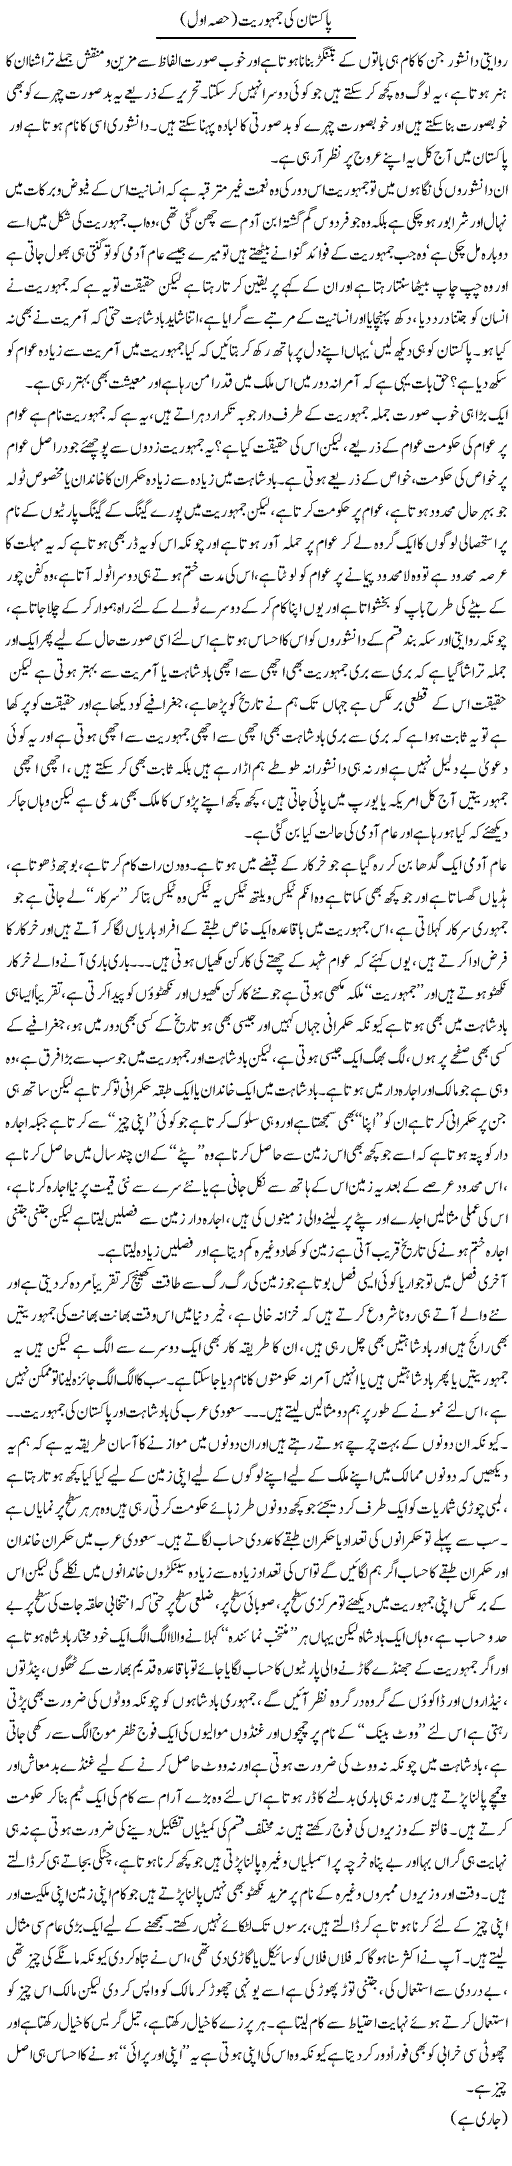 Pakistan Ki Jamhooriat | Saad Ullah Jan Barq | Daily Urdu Columns